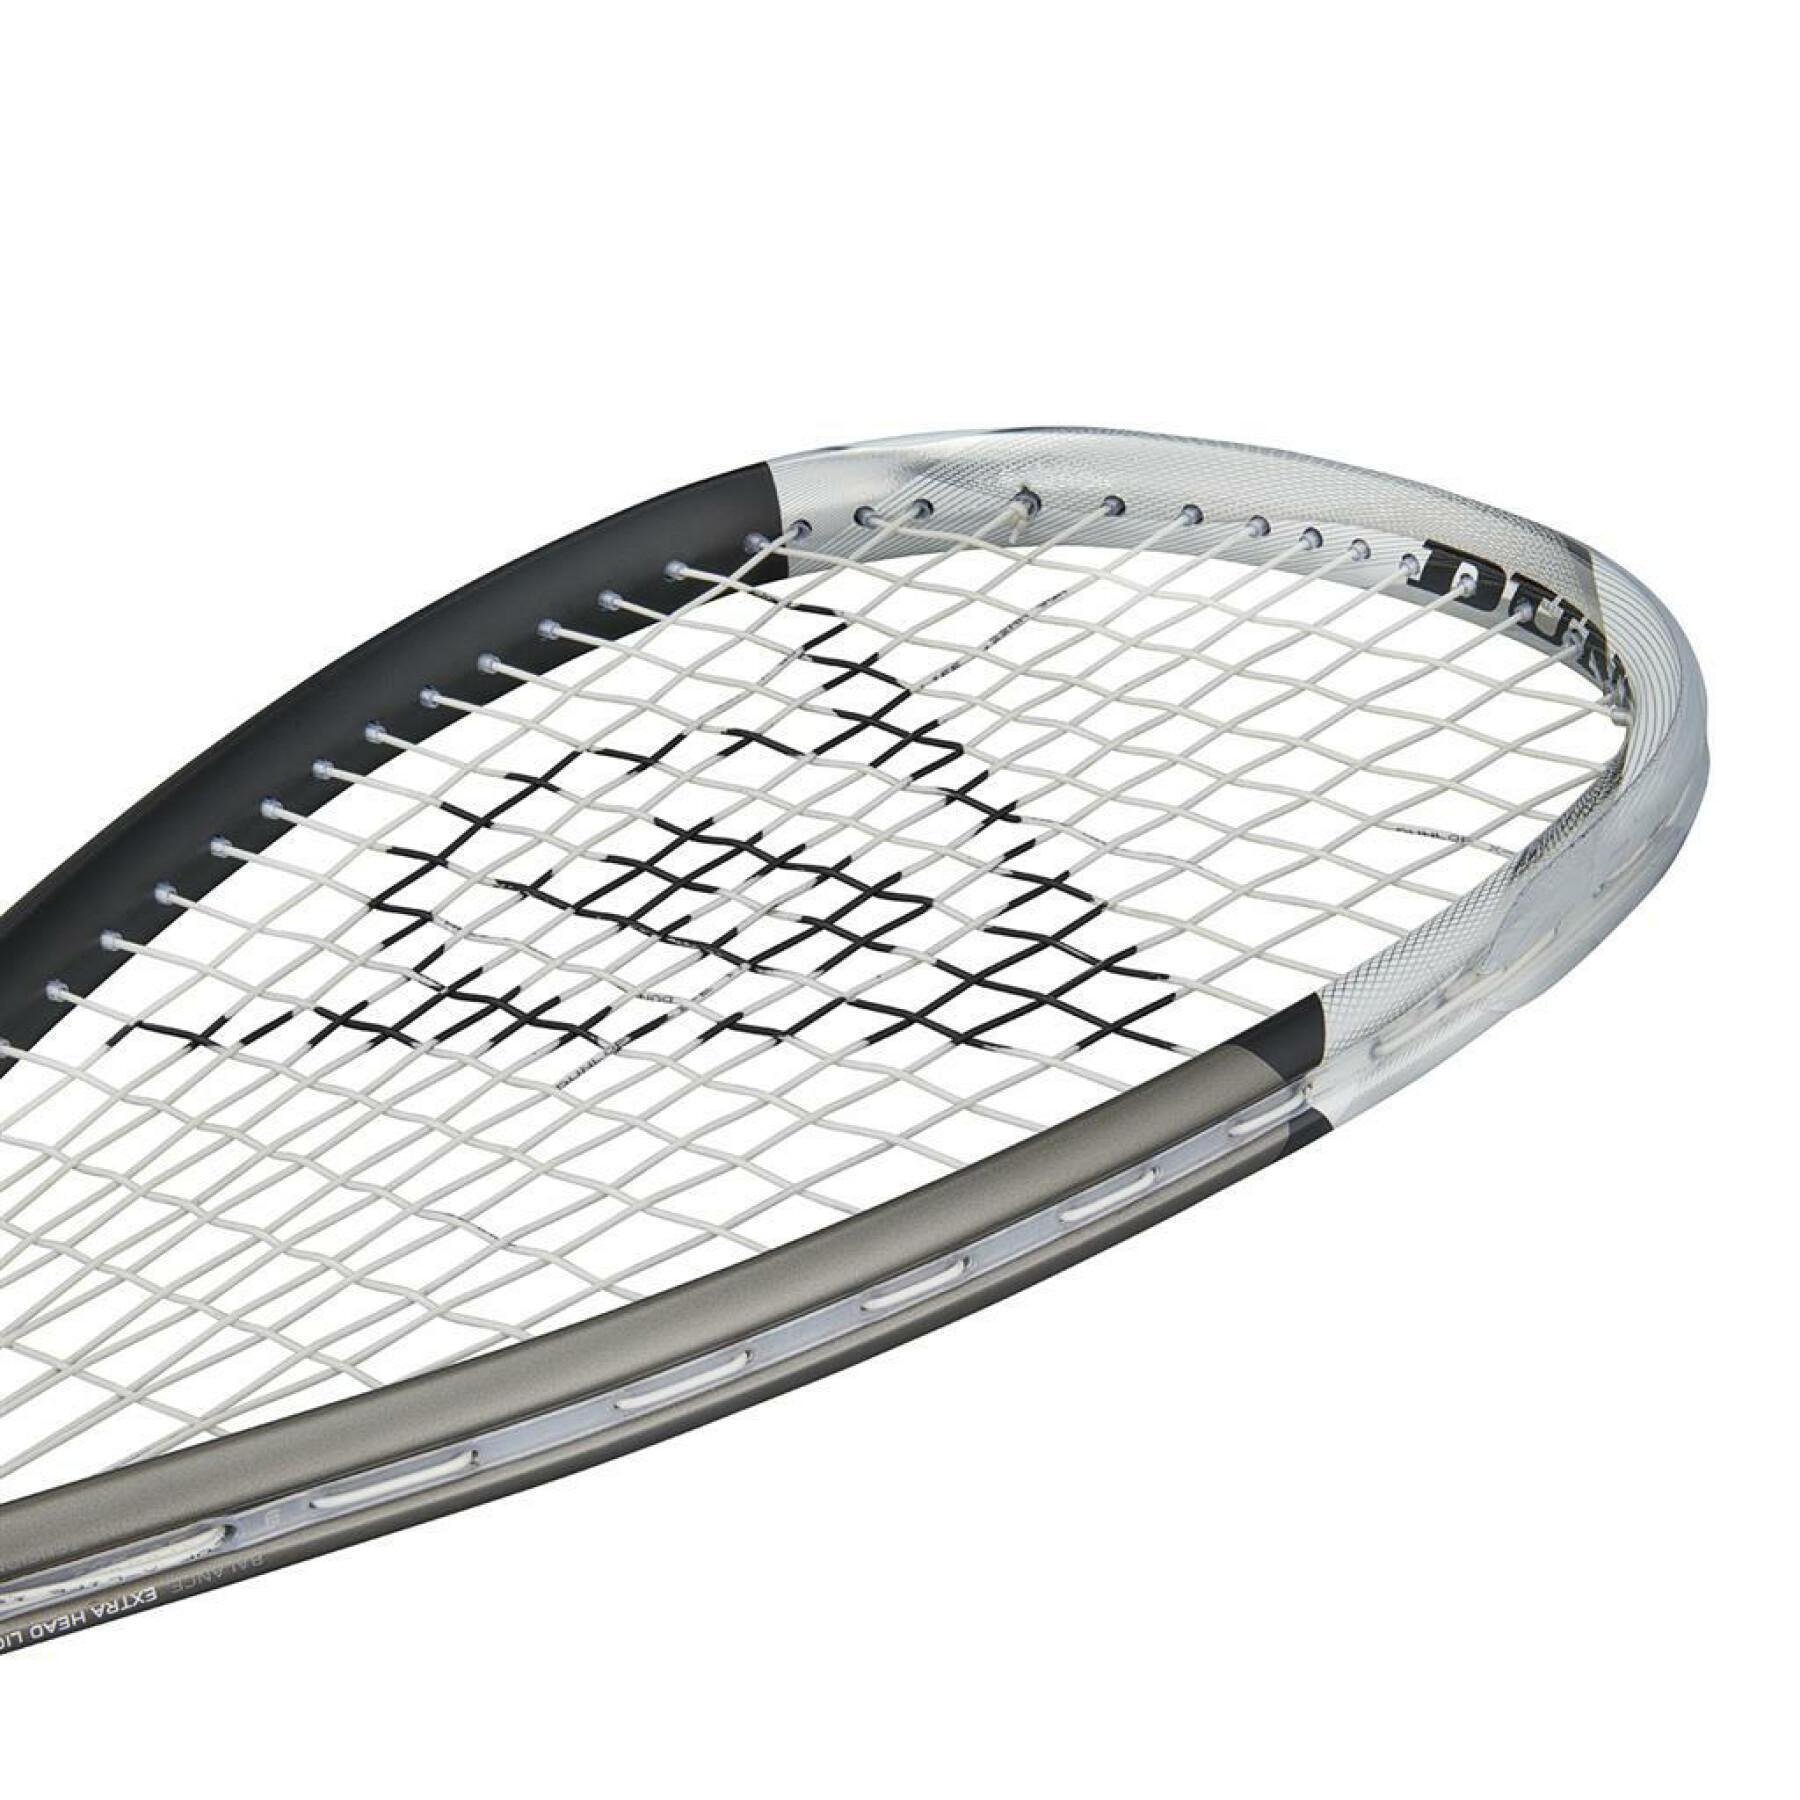 Racket Dunlop storm titanium 5.0